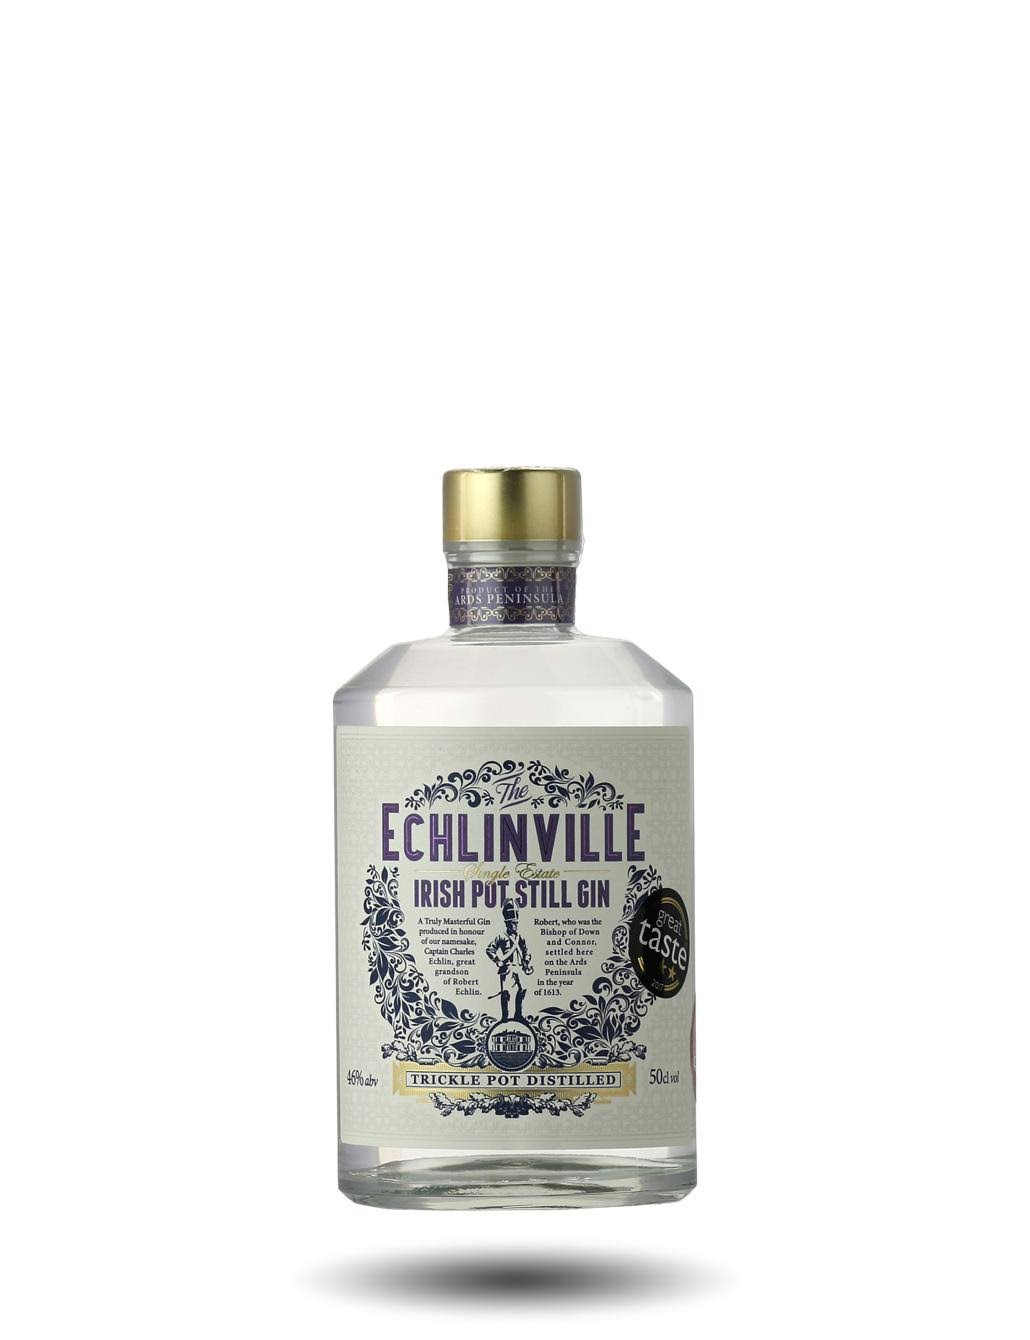 Echlinville Irish Pot Still Gin 50cl